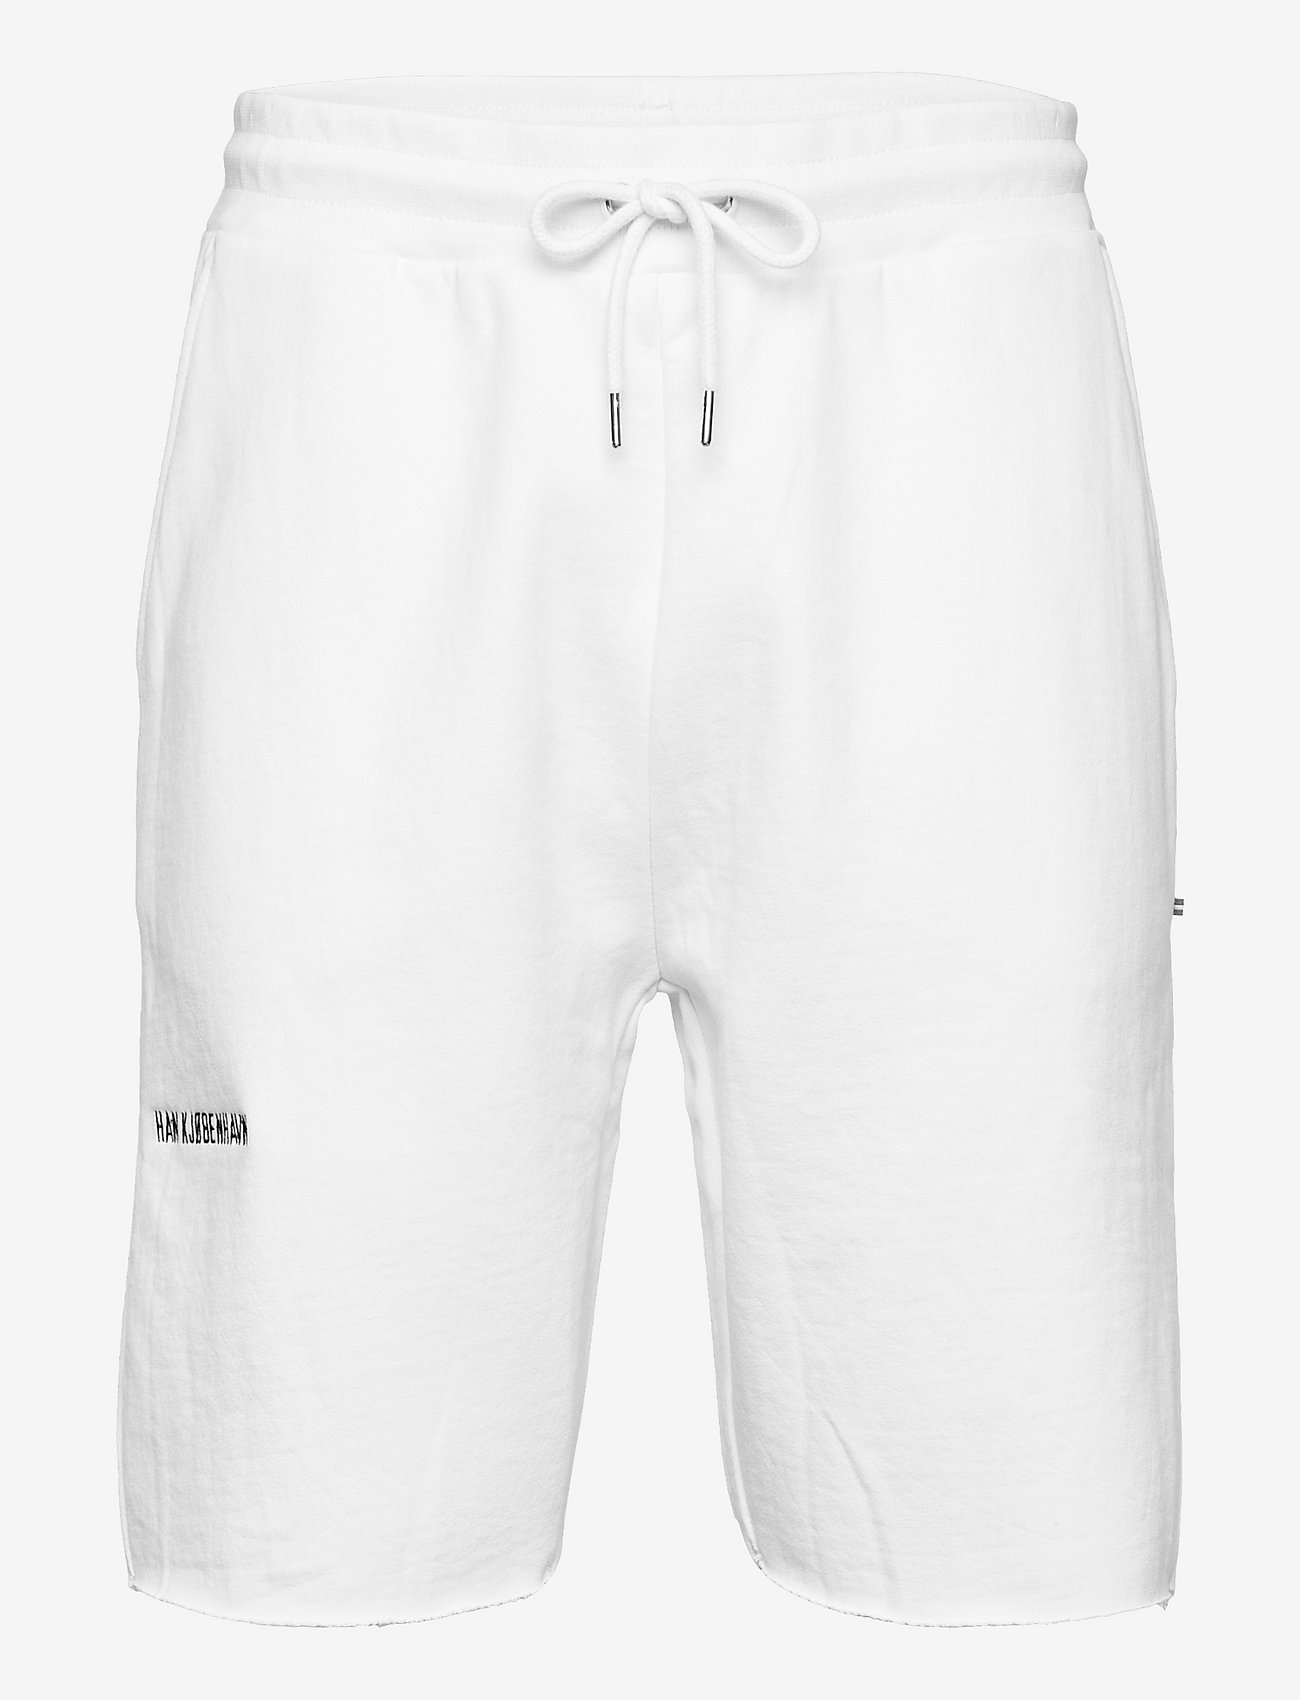 HAN Kjøbenhavn - Sweat shorts - szorty - white logo - 0